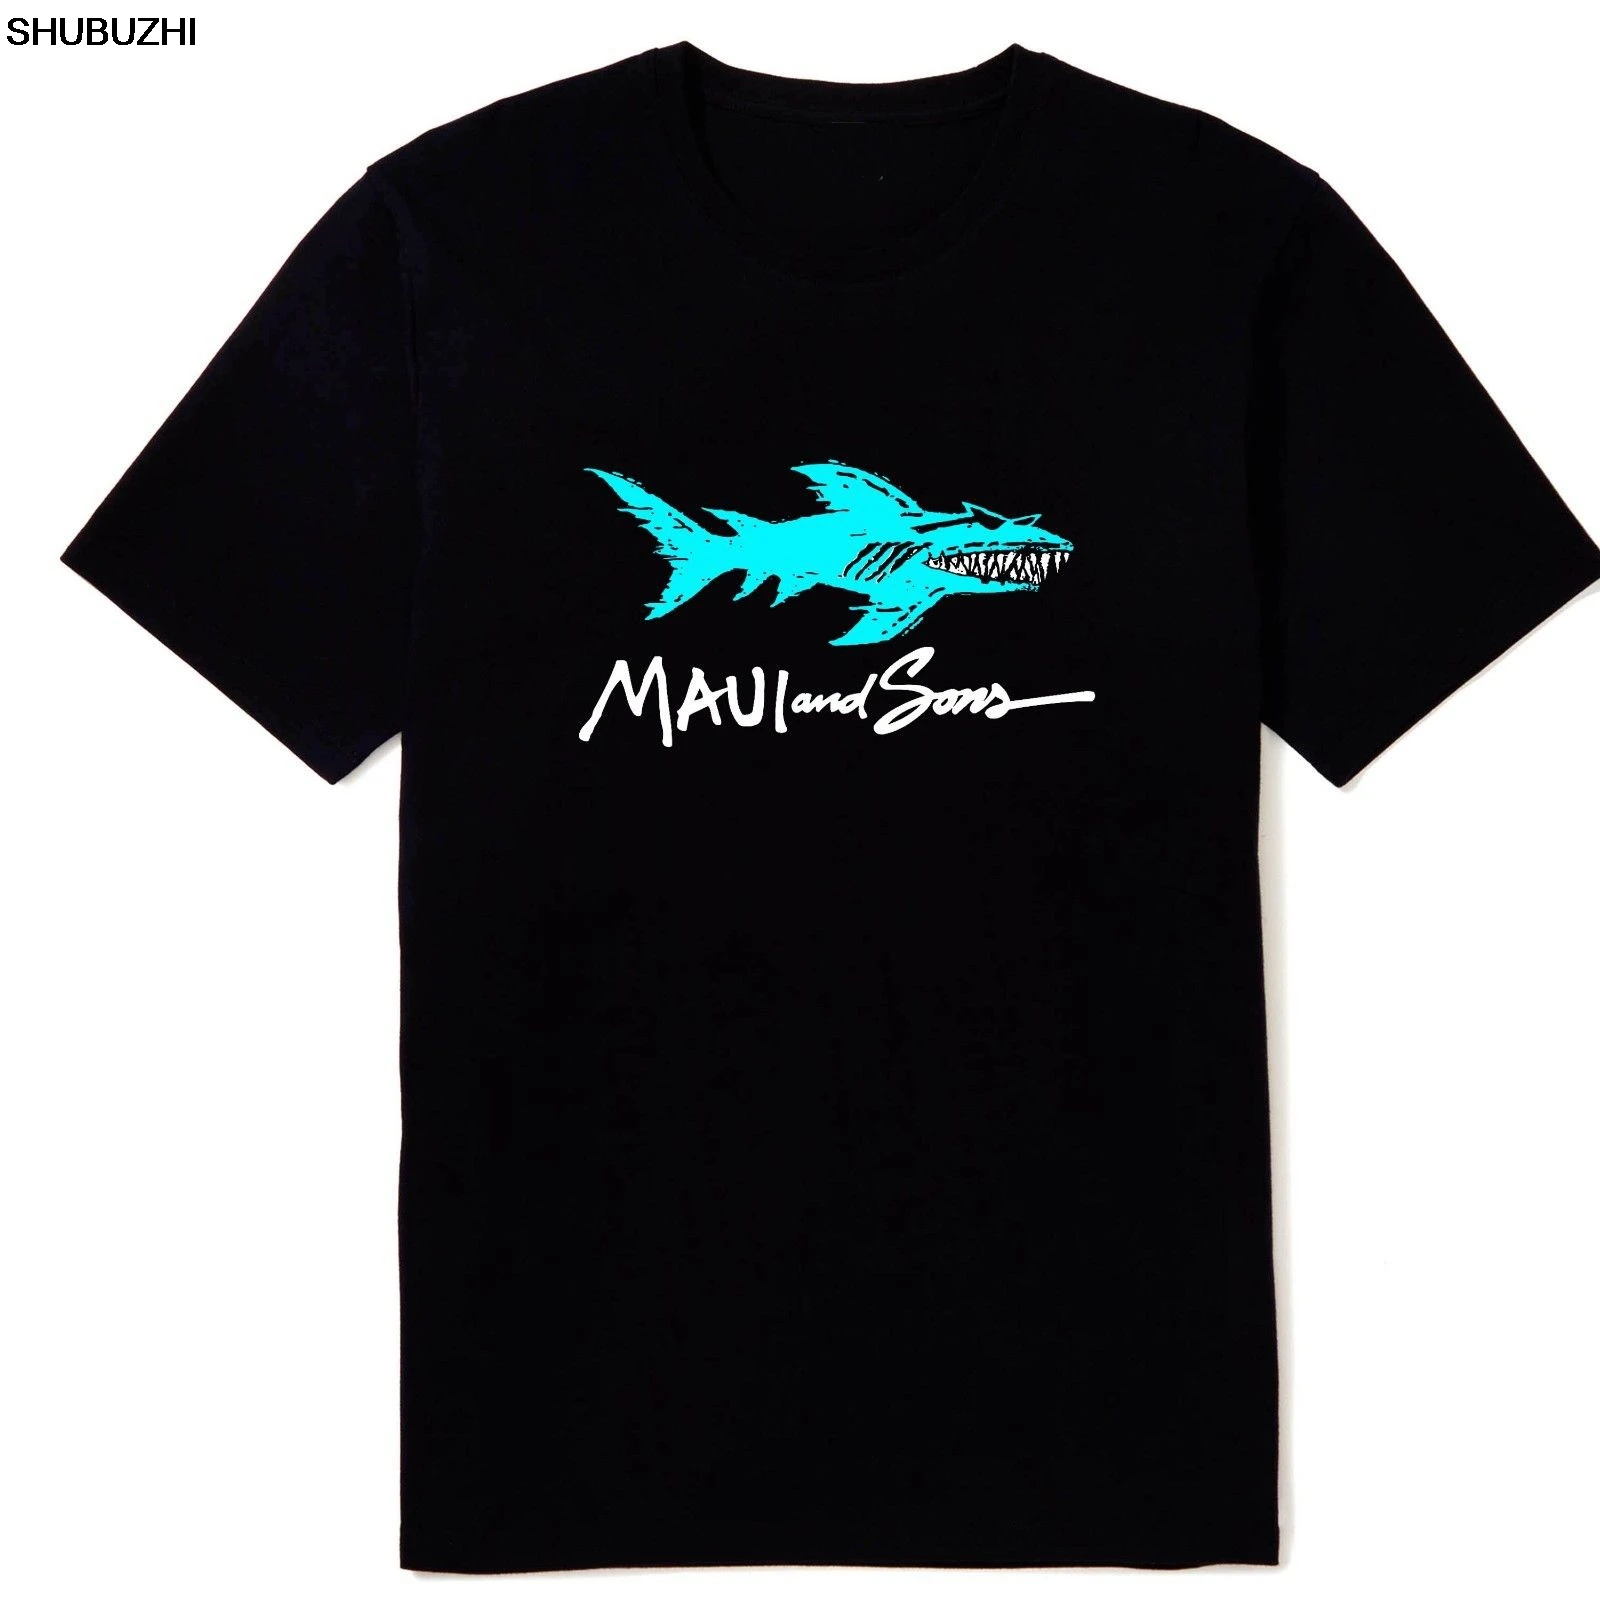 Новая мужская черная футболка с логотипом Maui and Sons Shark размеры летняя рисунком